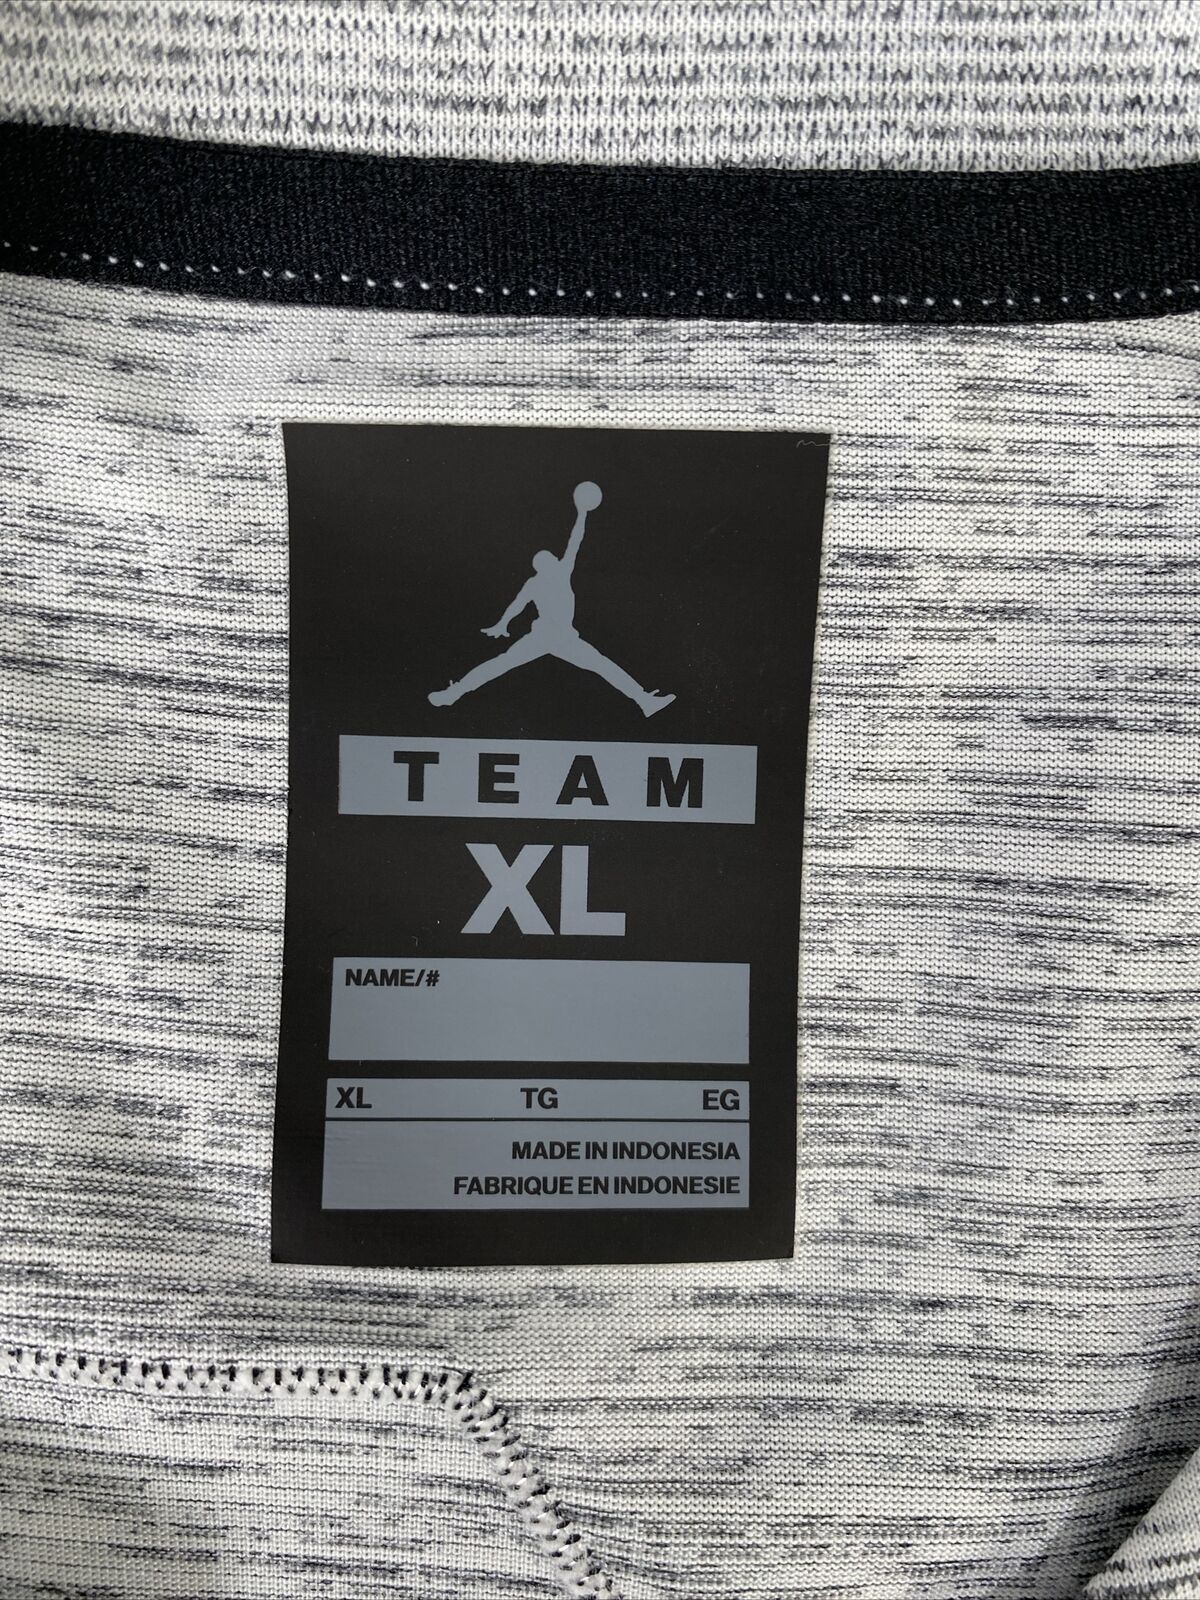 Air Jordan Men's Gray/White #4 Team Athletic Jersey - XL